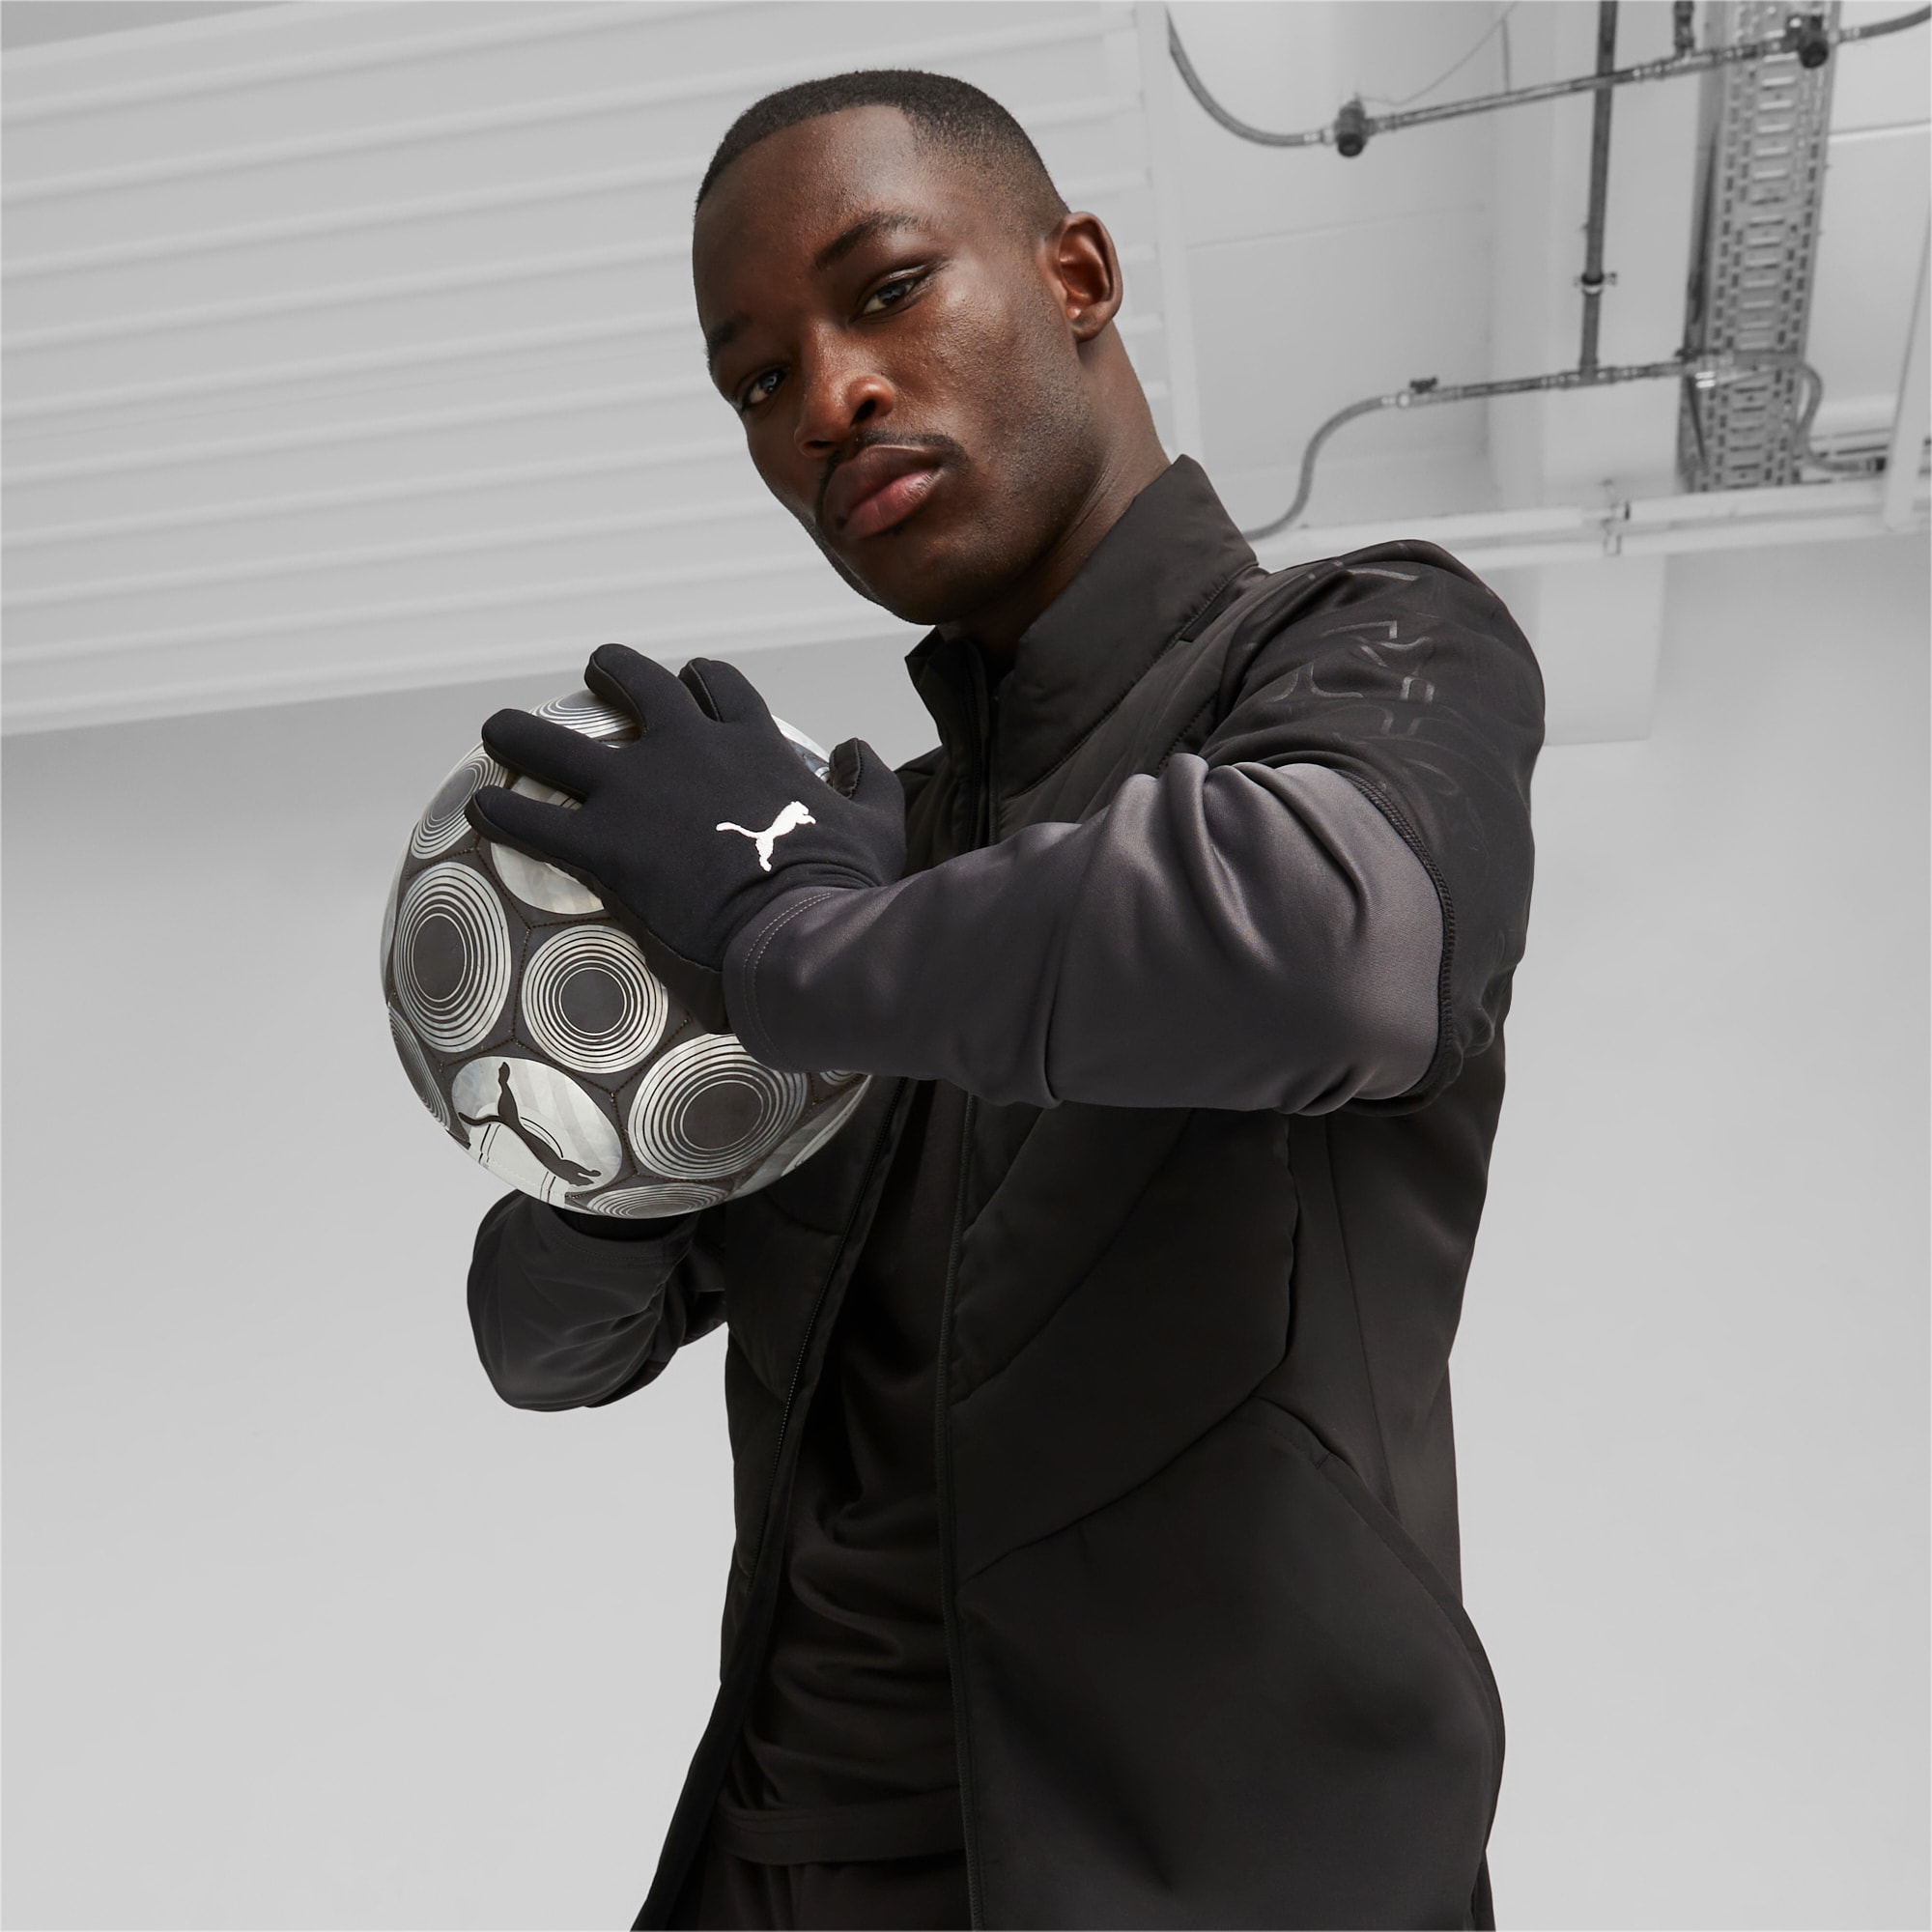 Women's PUMA Individualwinterized Football Gloves, Black/White, Size S, Accessories